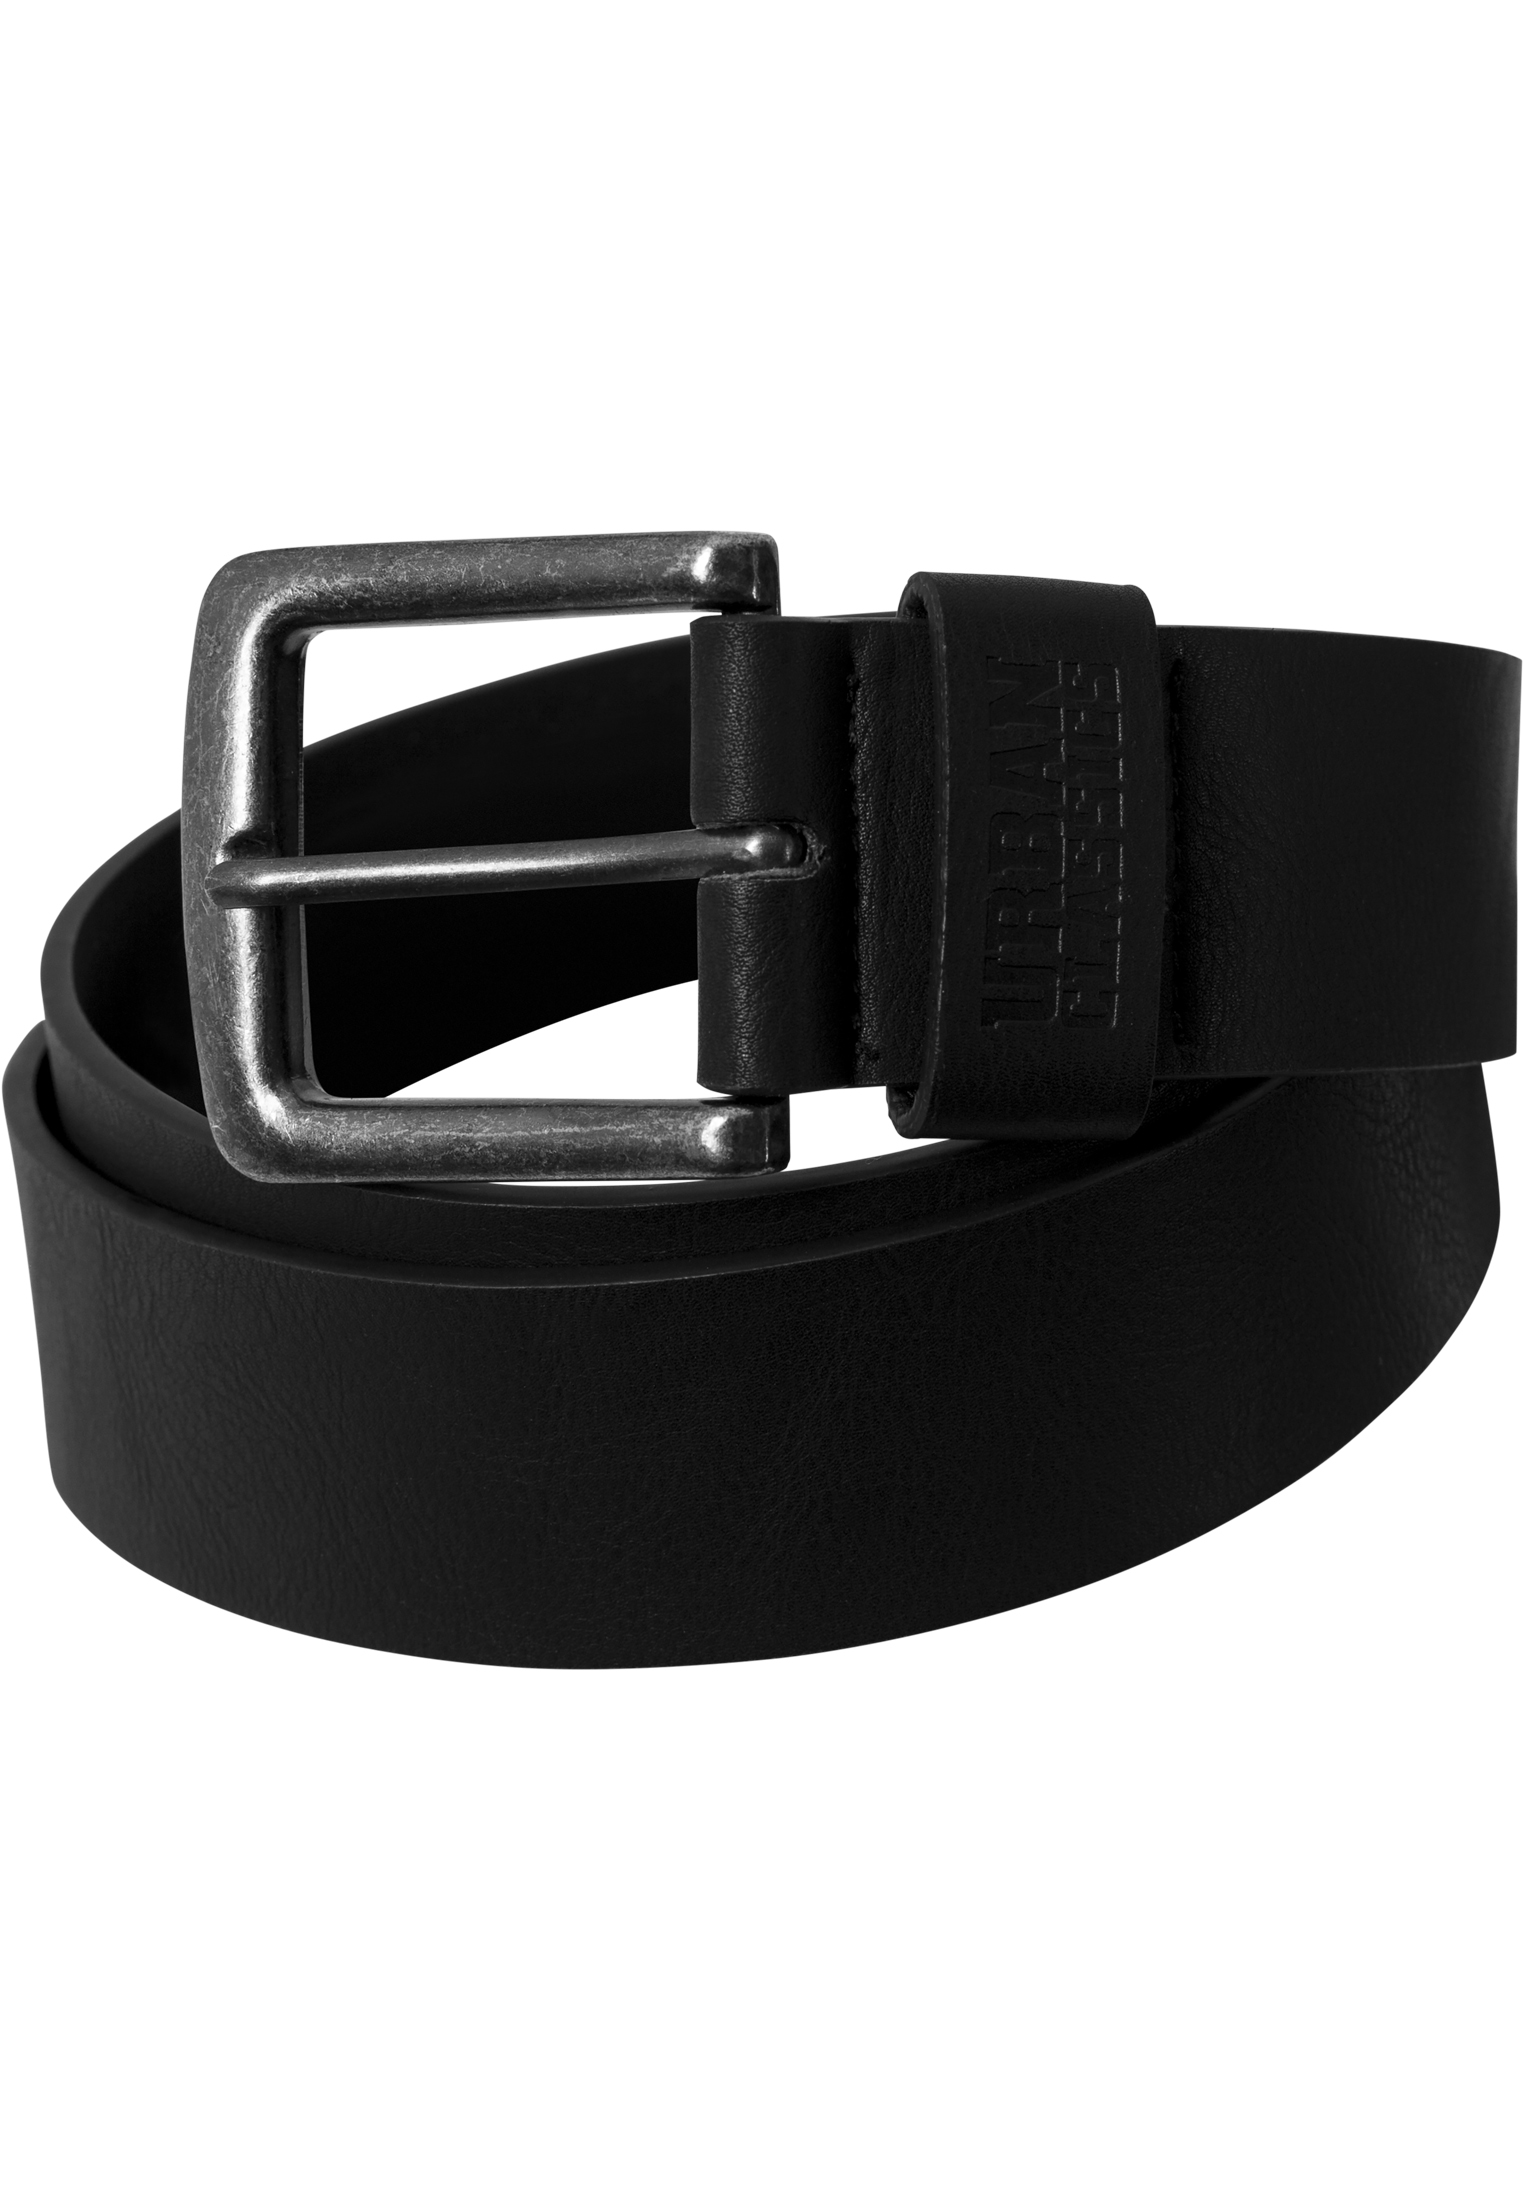 G?rtel Leather Imitation Belt in Farbe black